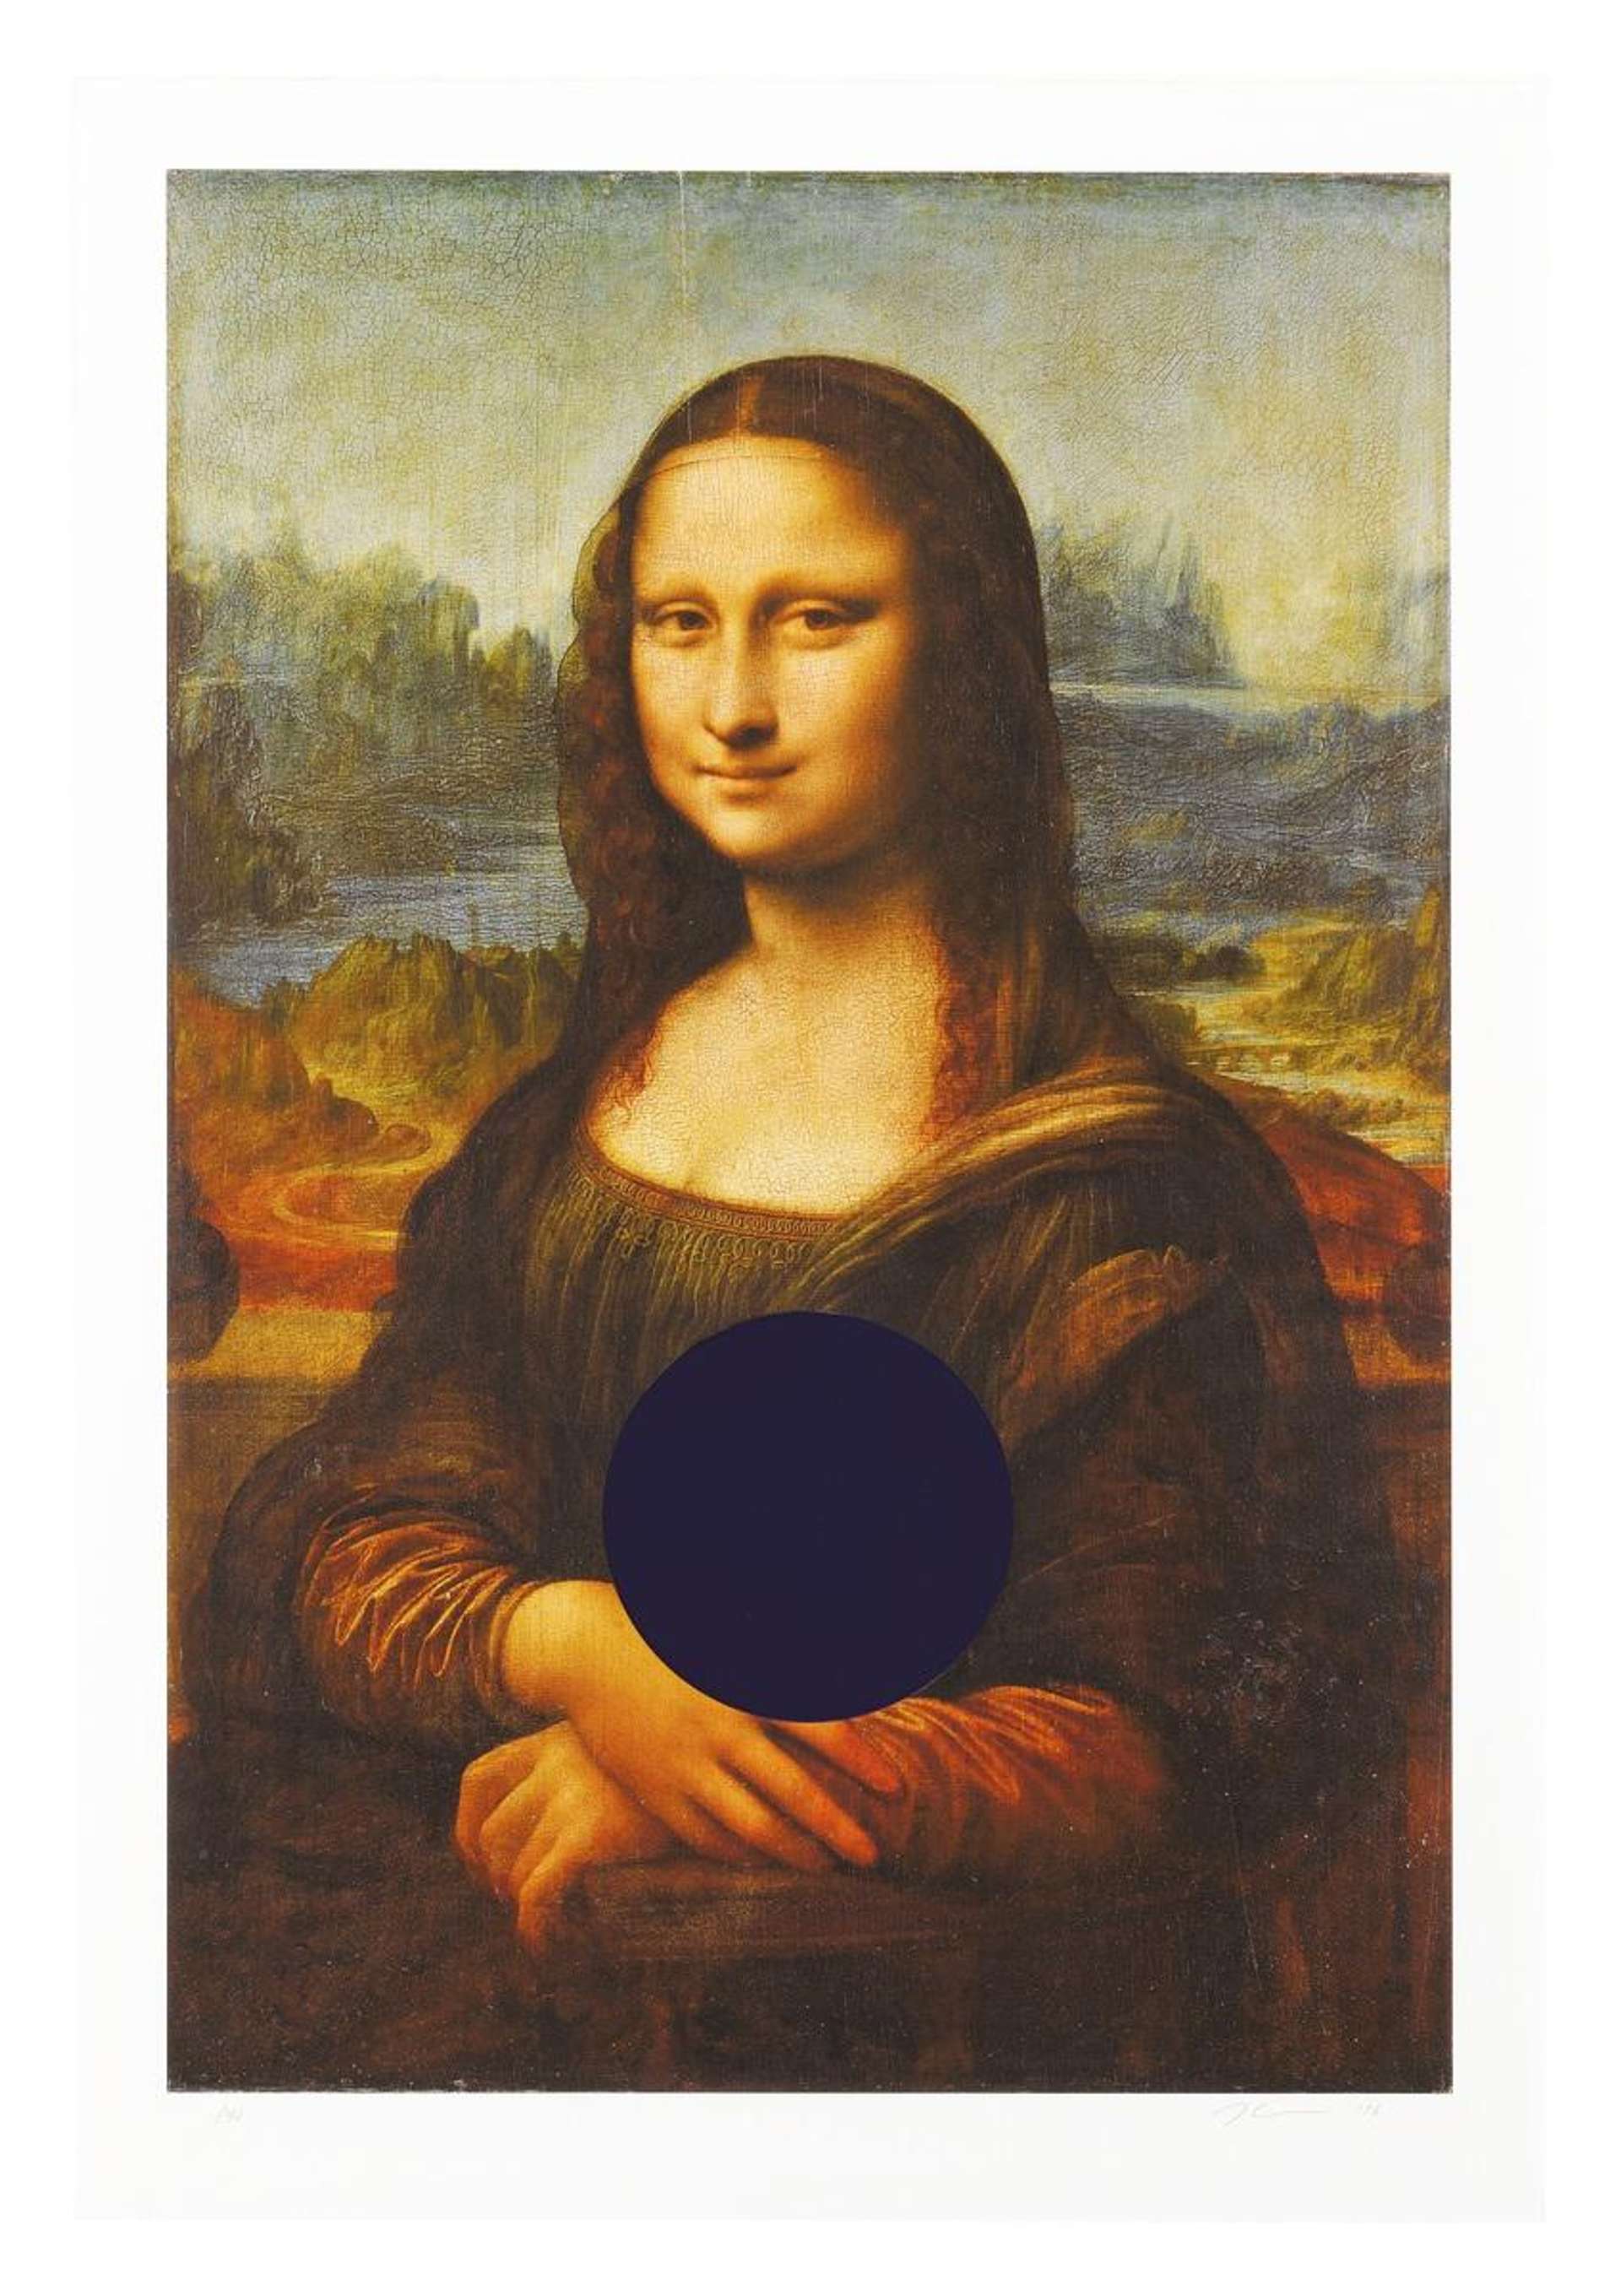 A print appropriating Leonardo da Vinci's Mona Lisa by Jeff Koons, where the artist has imposed a large blue circle over the original portrait.